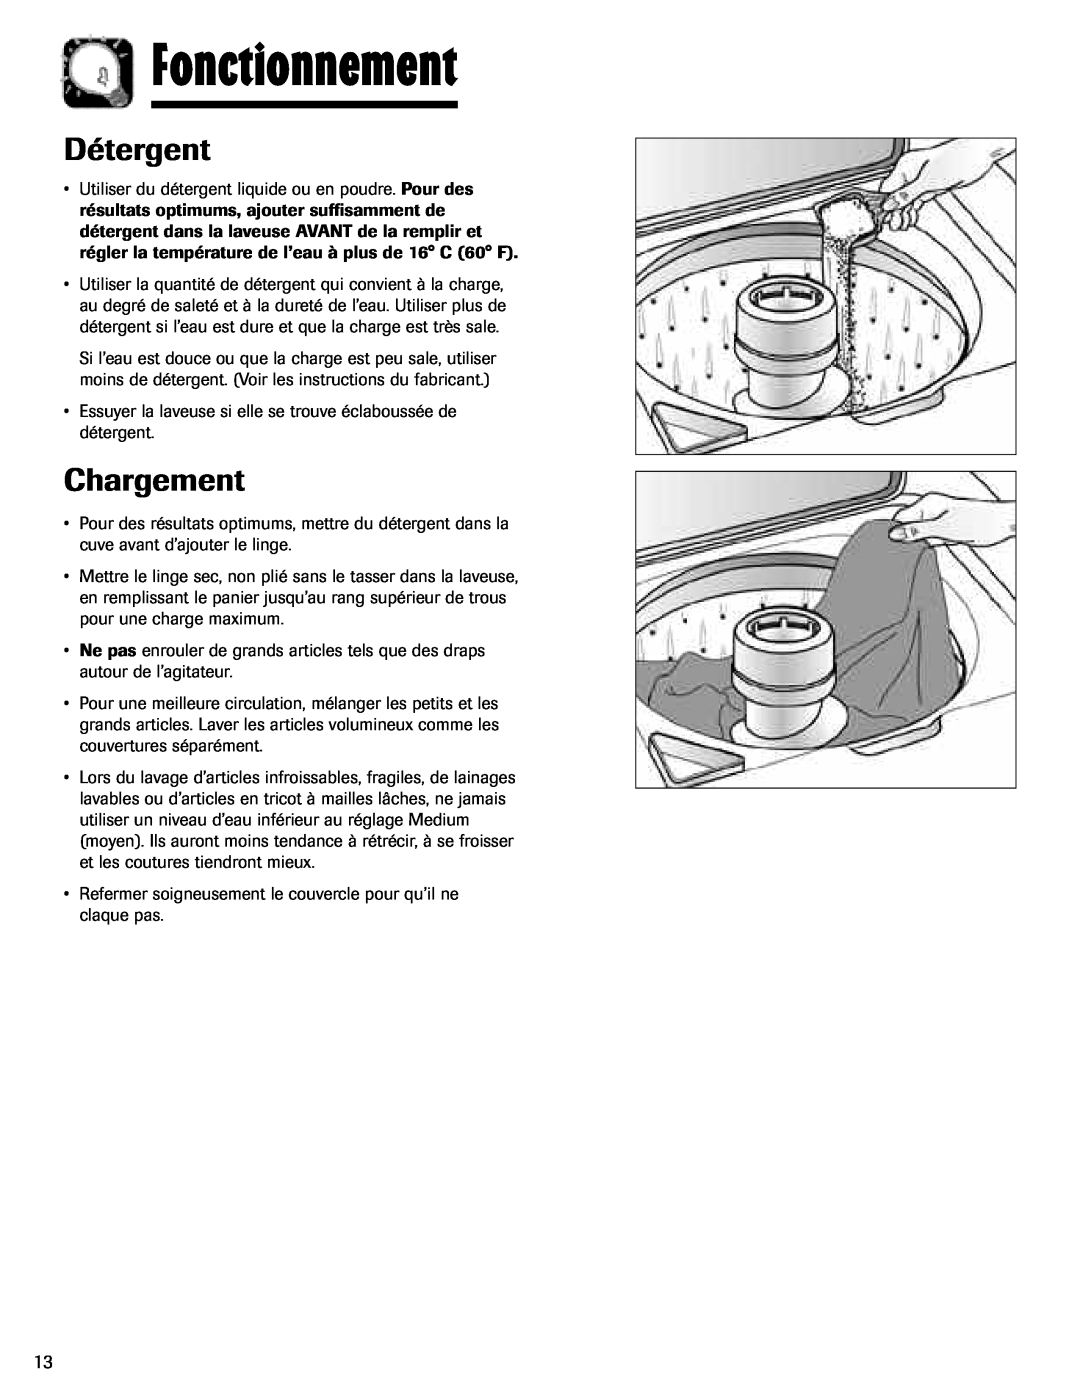 Maytag MAV-3 important safety instructions Fonctionnement, Détergent, Chargement 